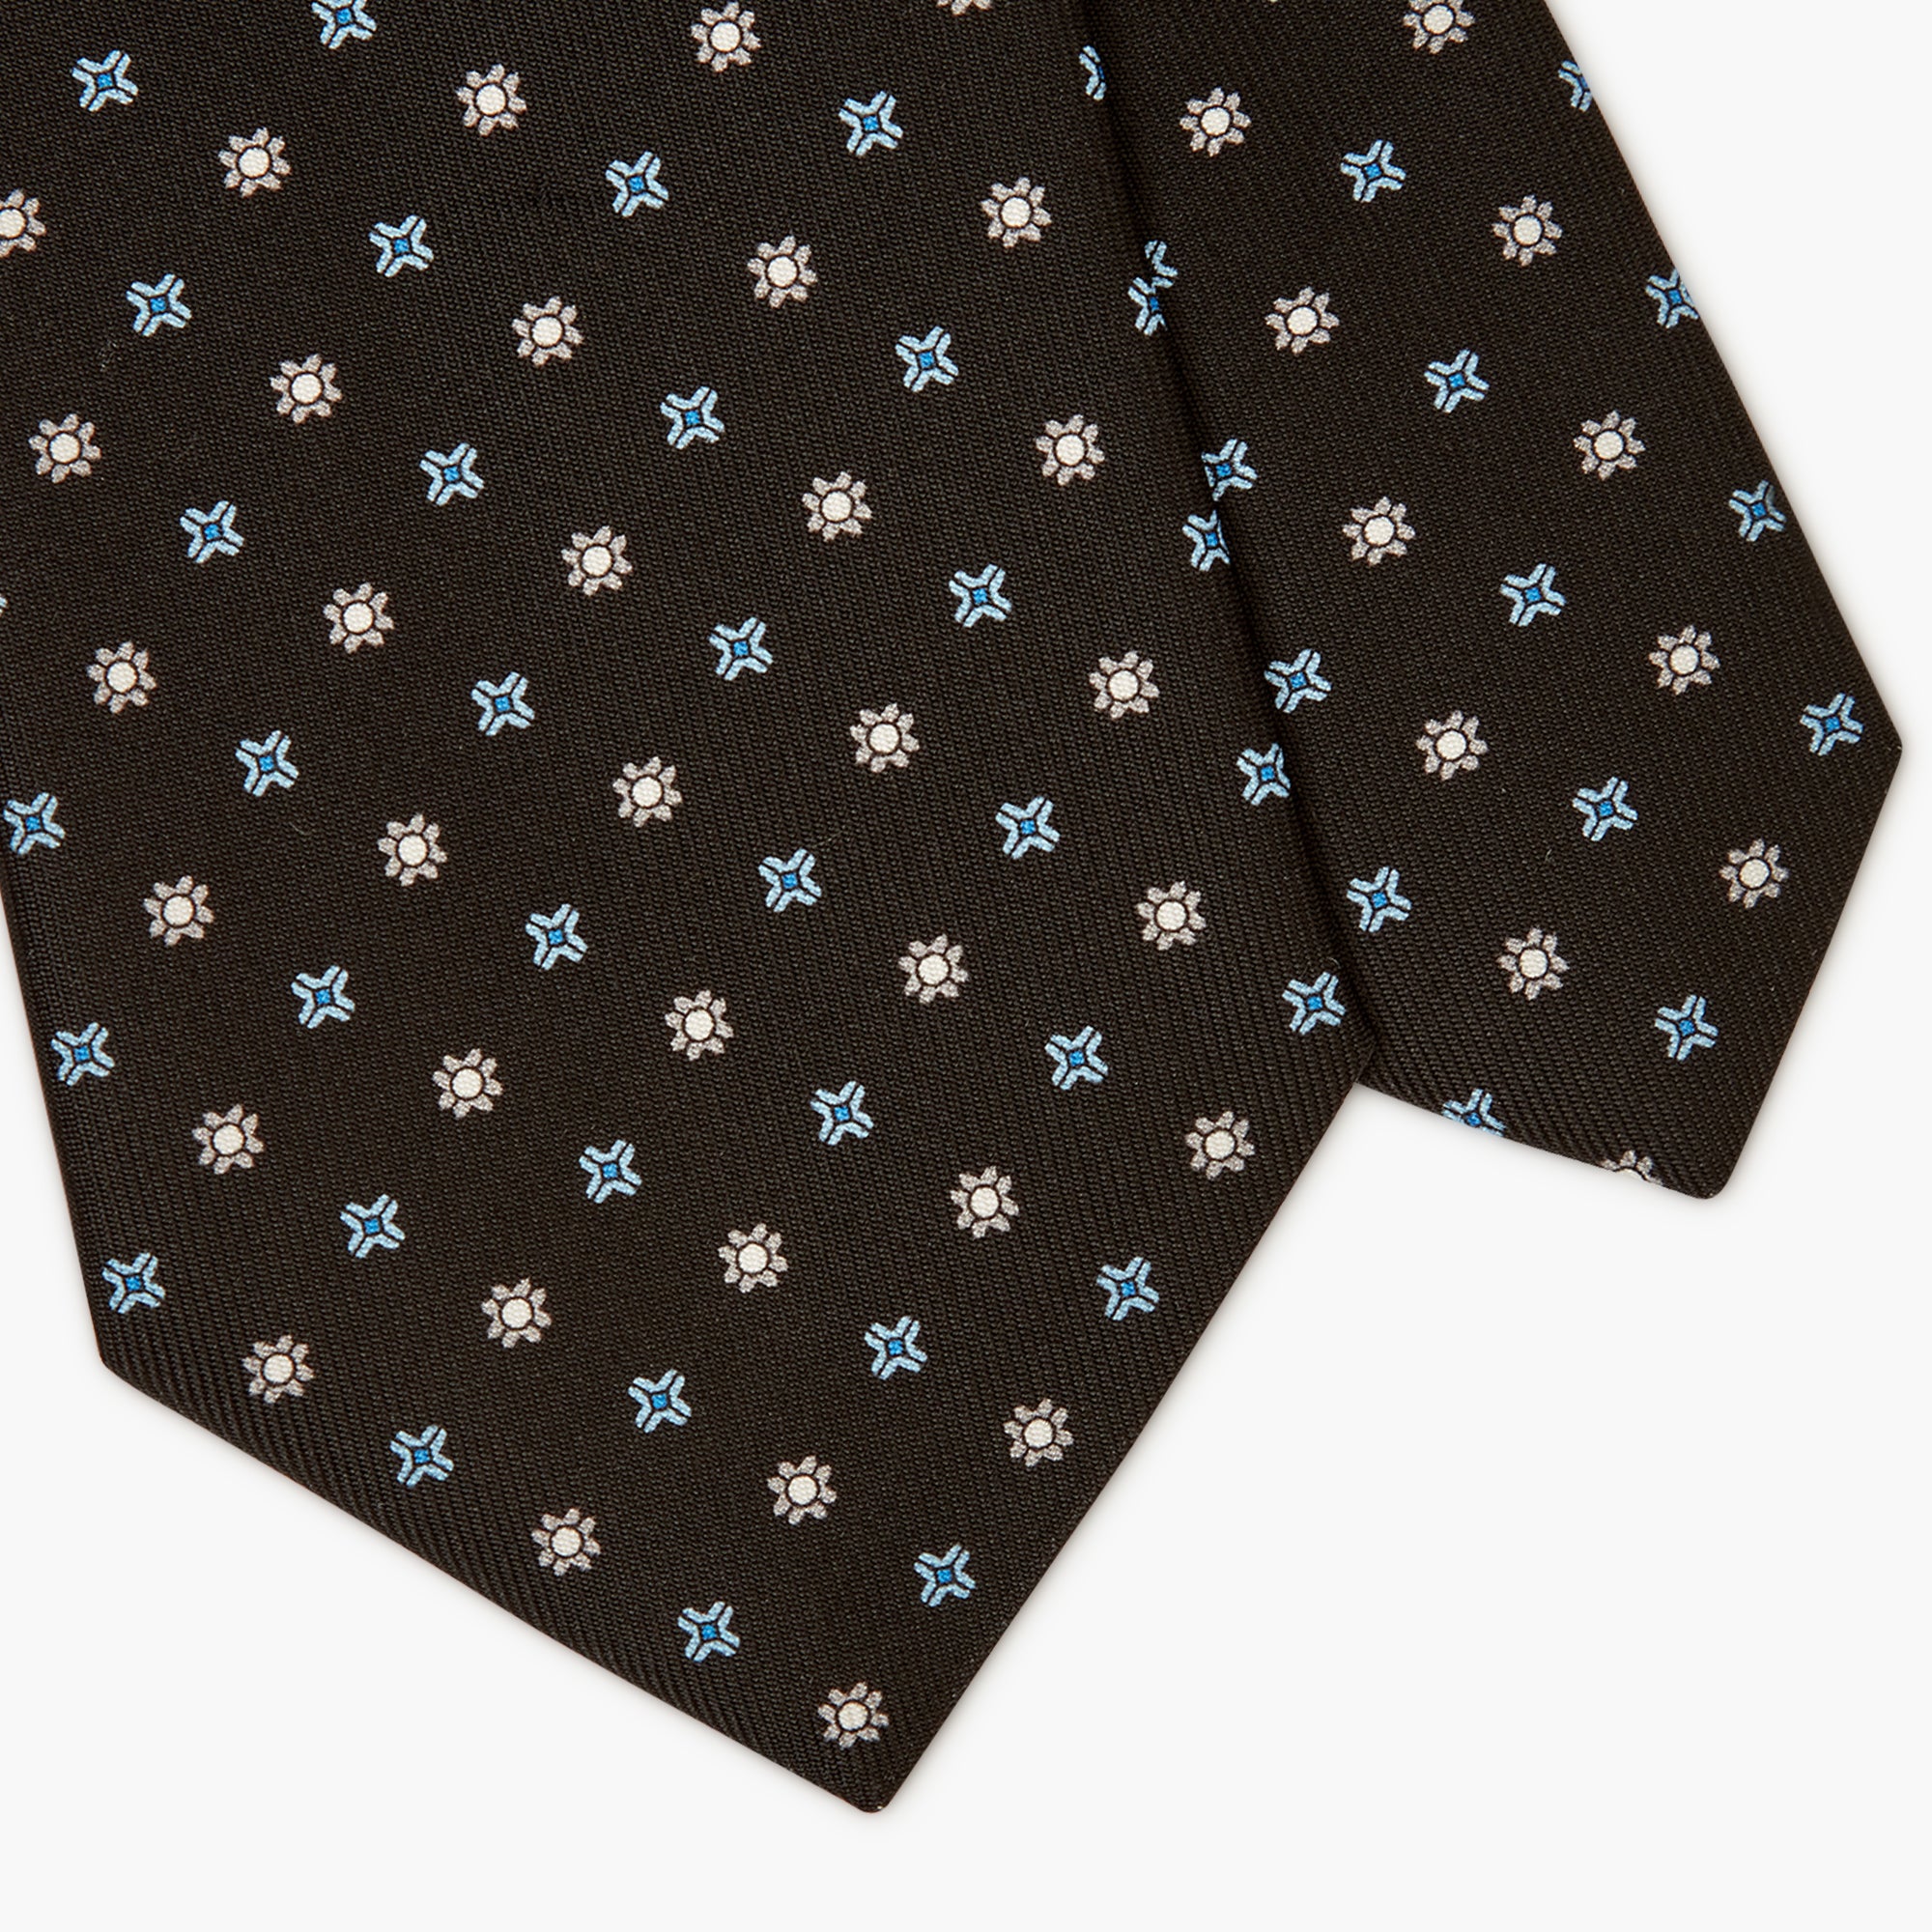 3-Fold Floral Printed English Silk Tie - Black